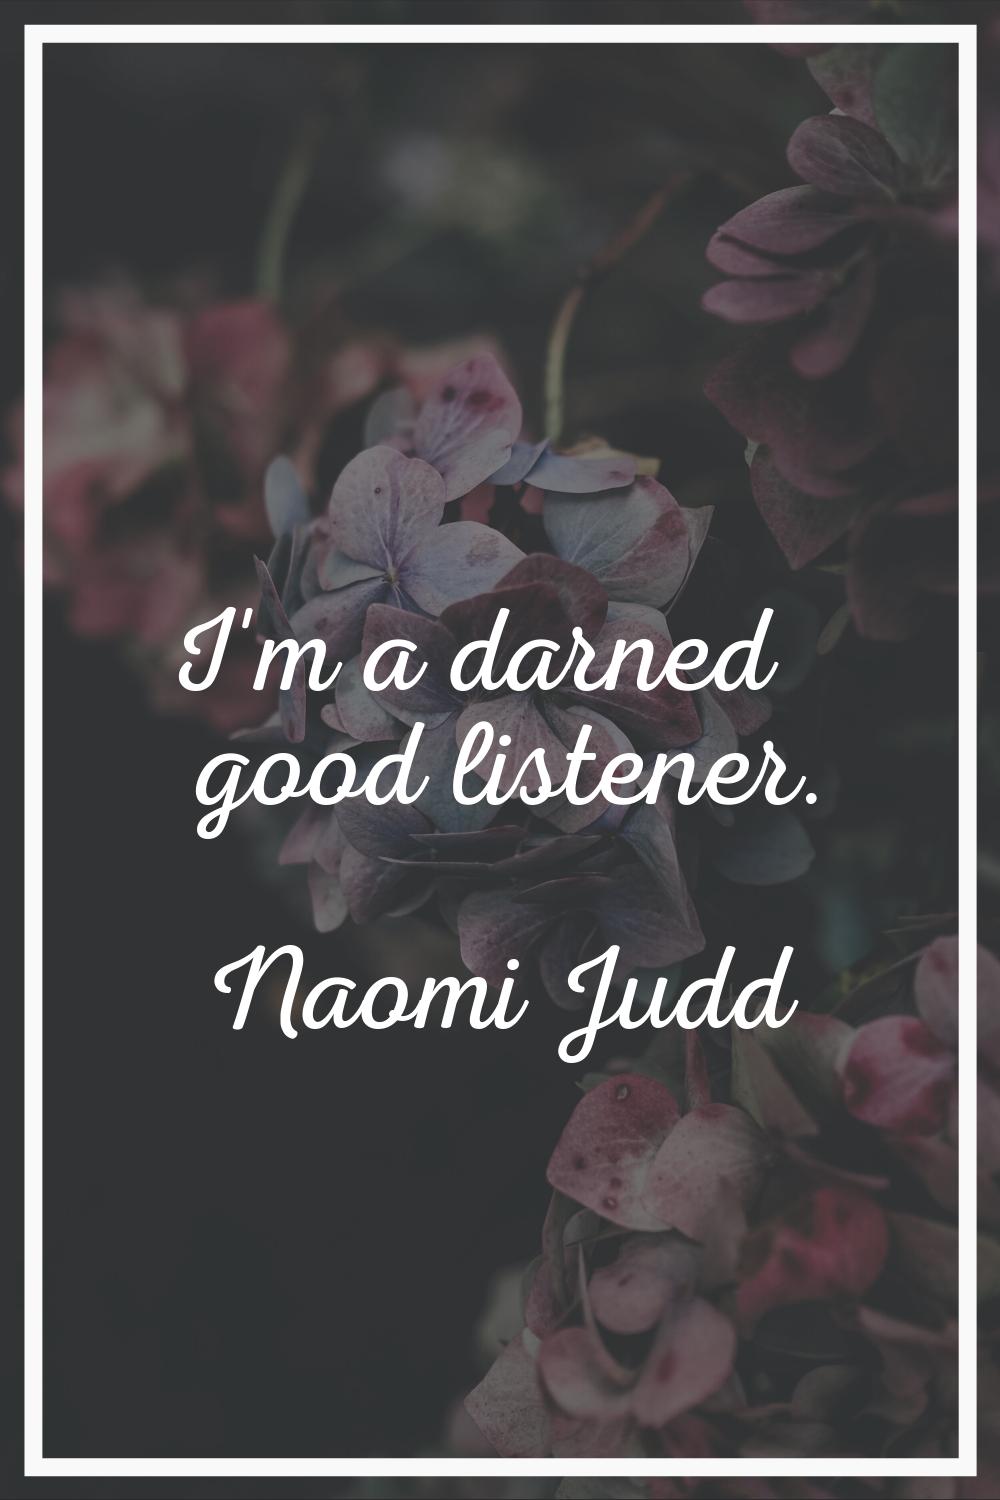 I'm a darned good listener.